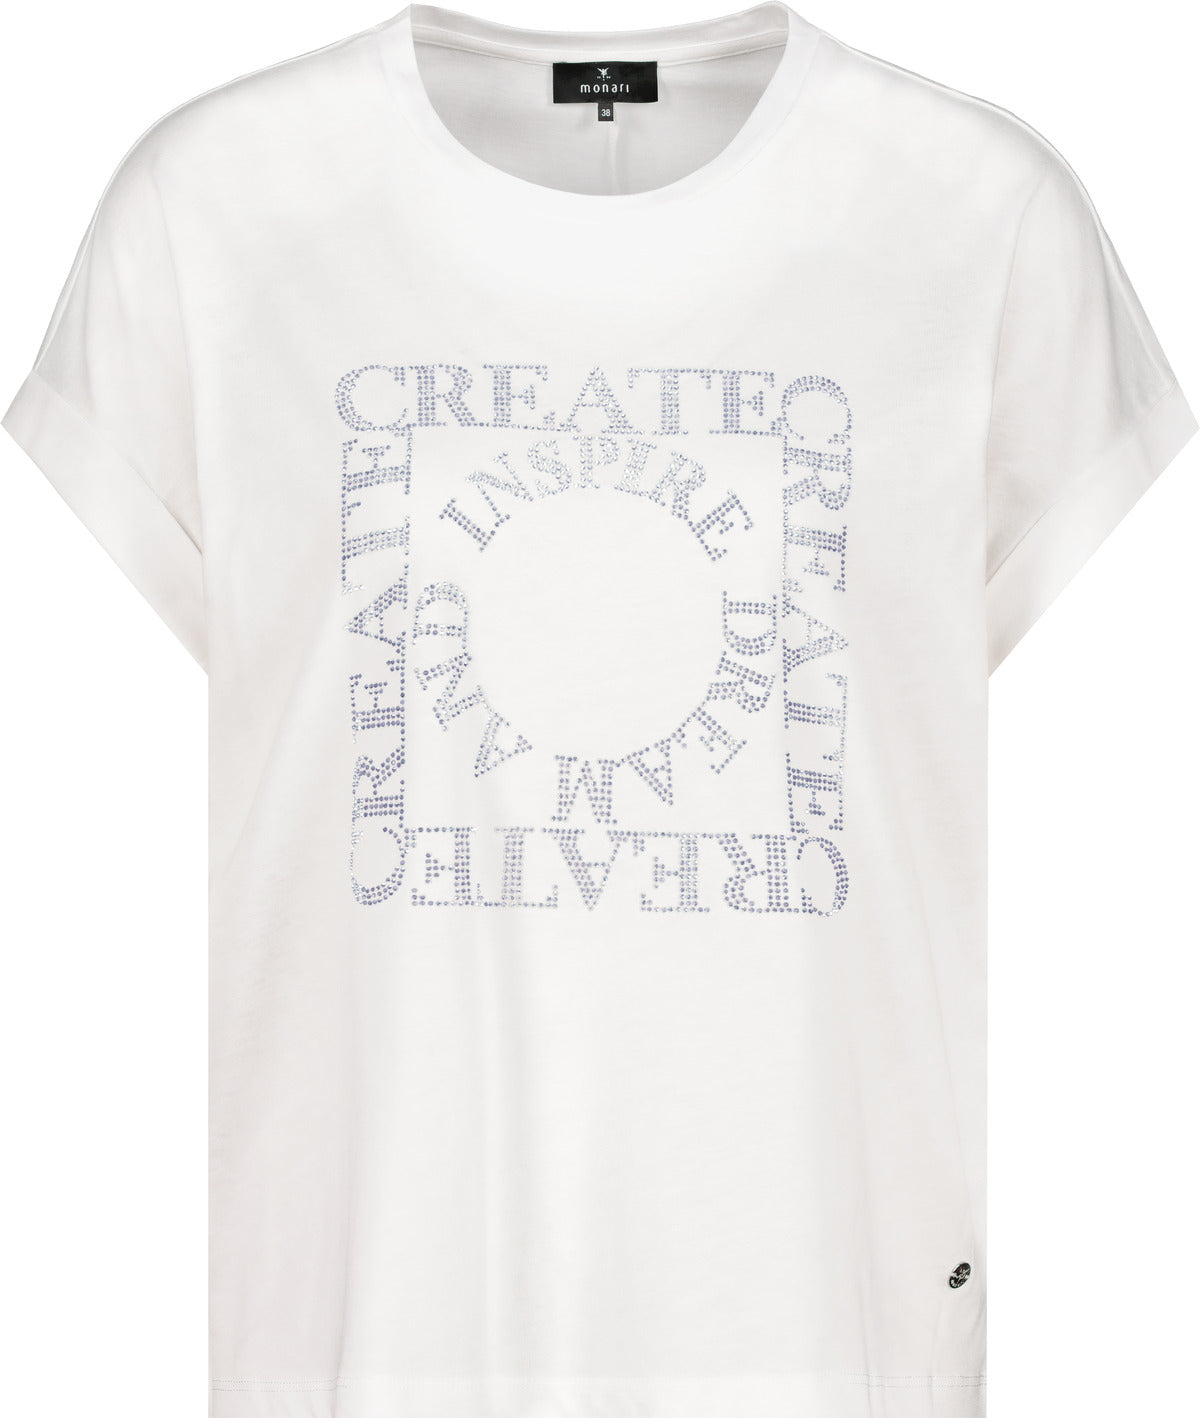 Monari Damen T-Shirt mit Strass Schrift